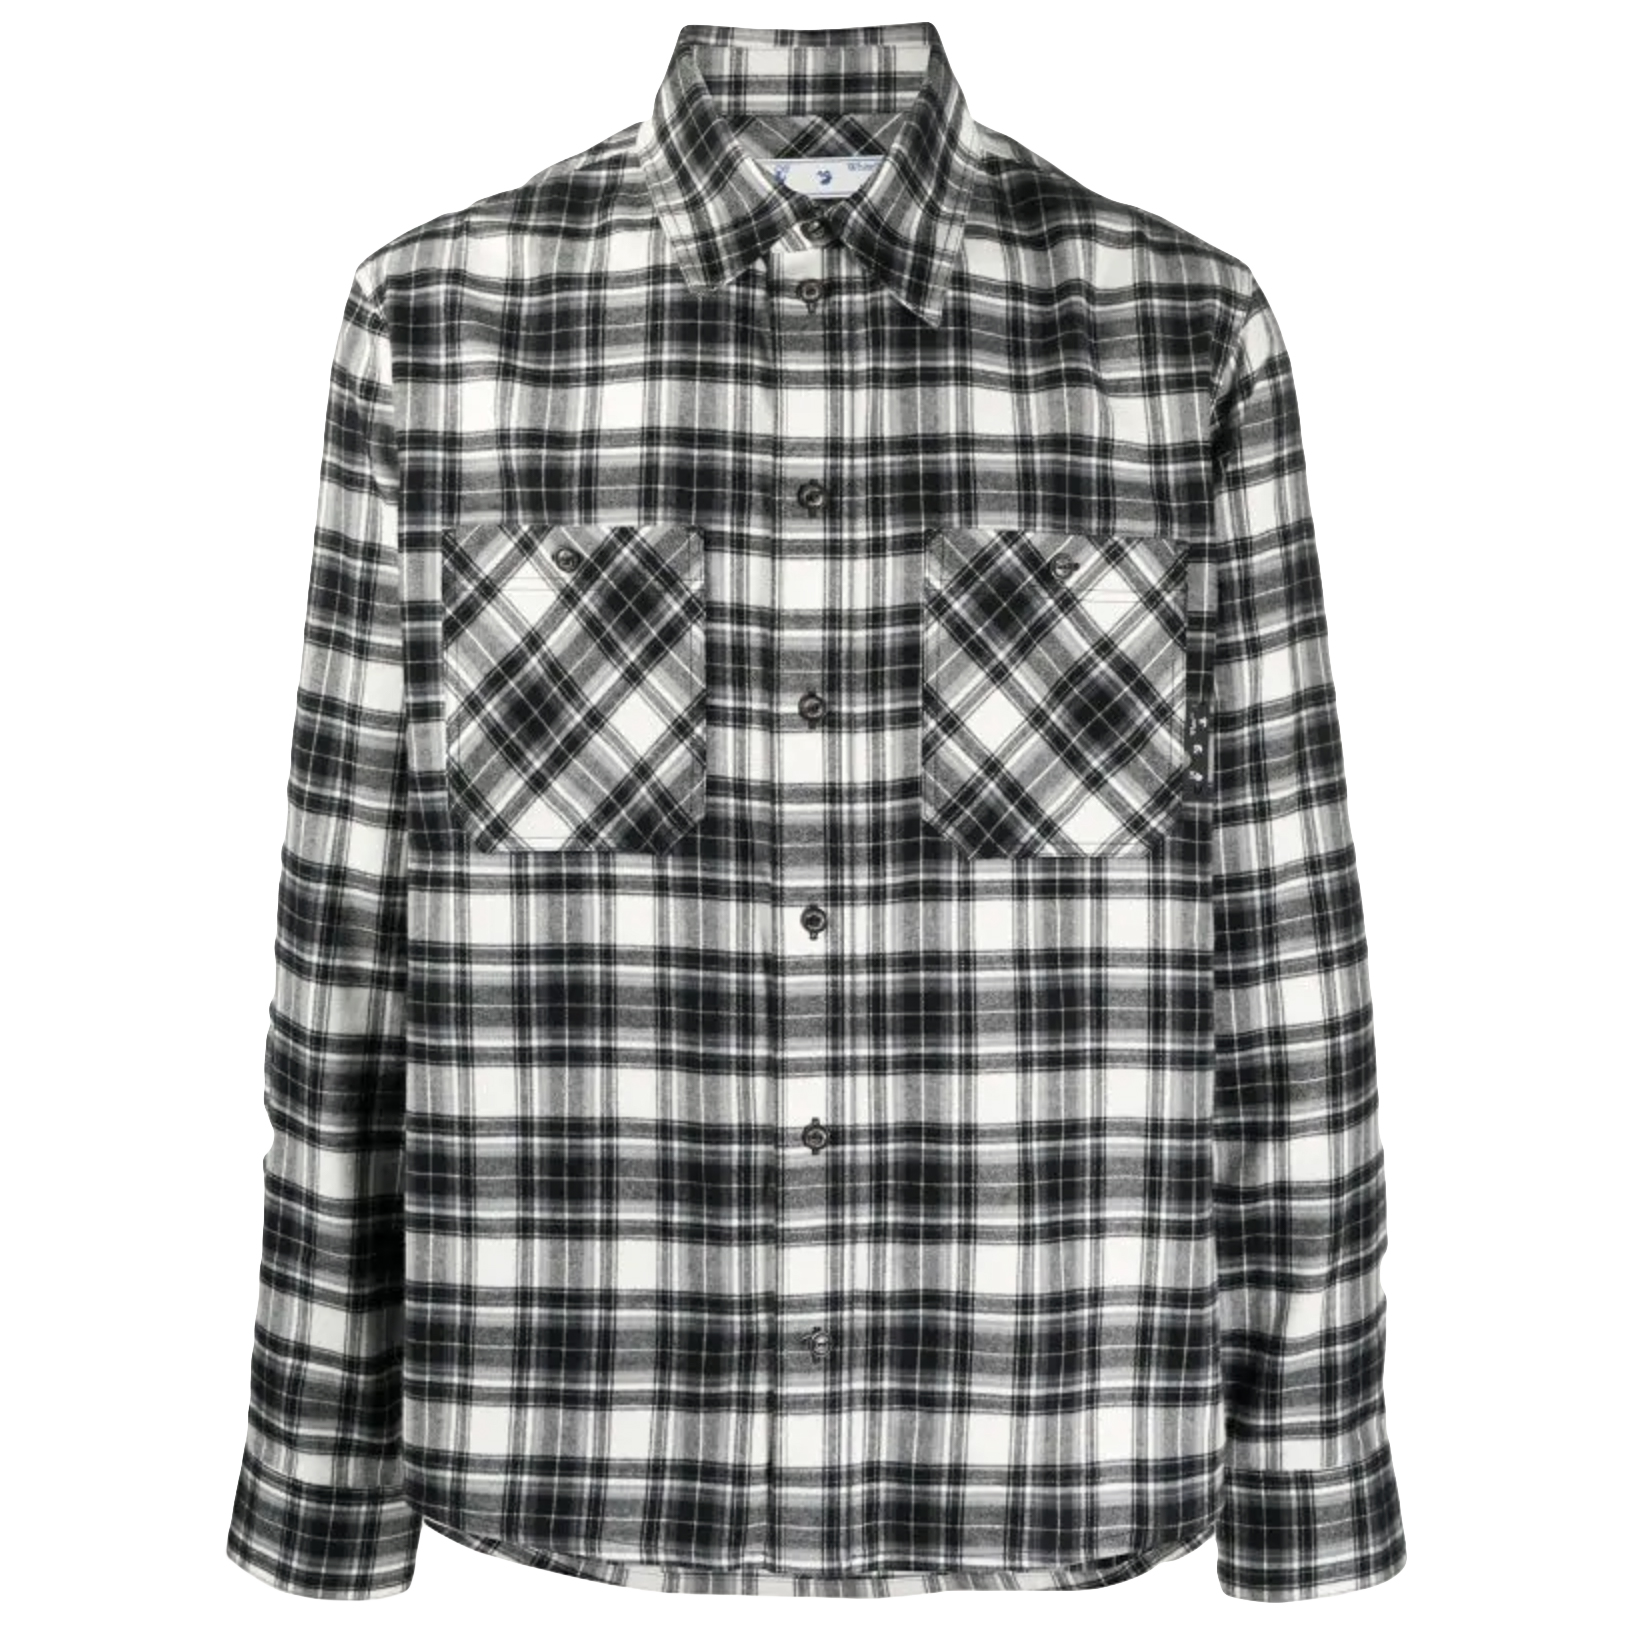 Off-White Allover Check Flannel Arrow Shirt Black/White